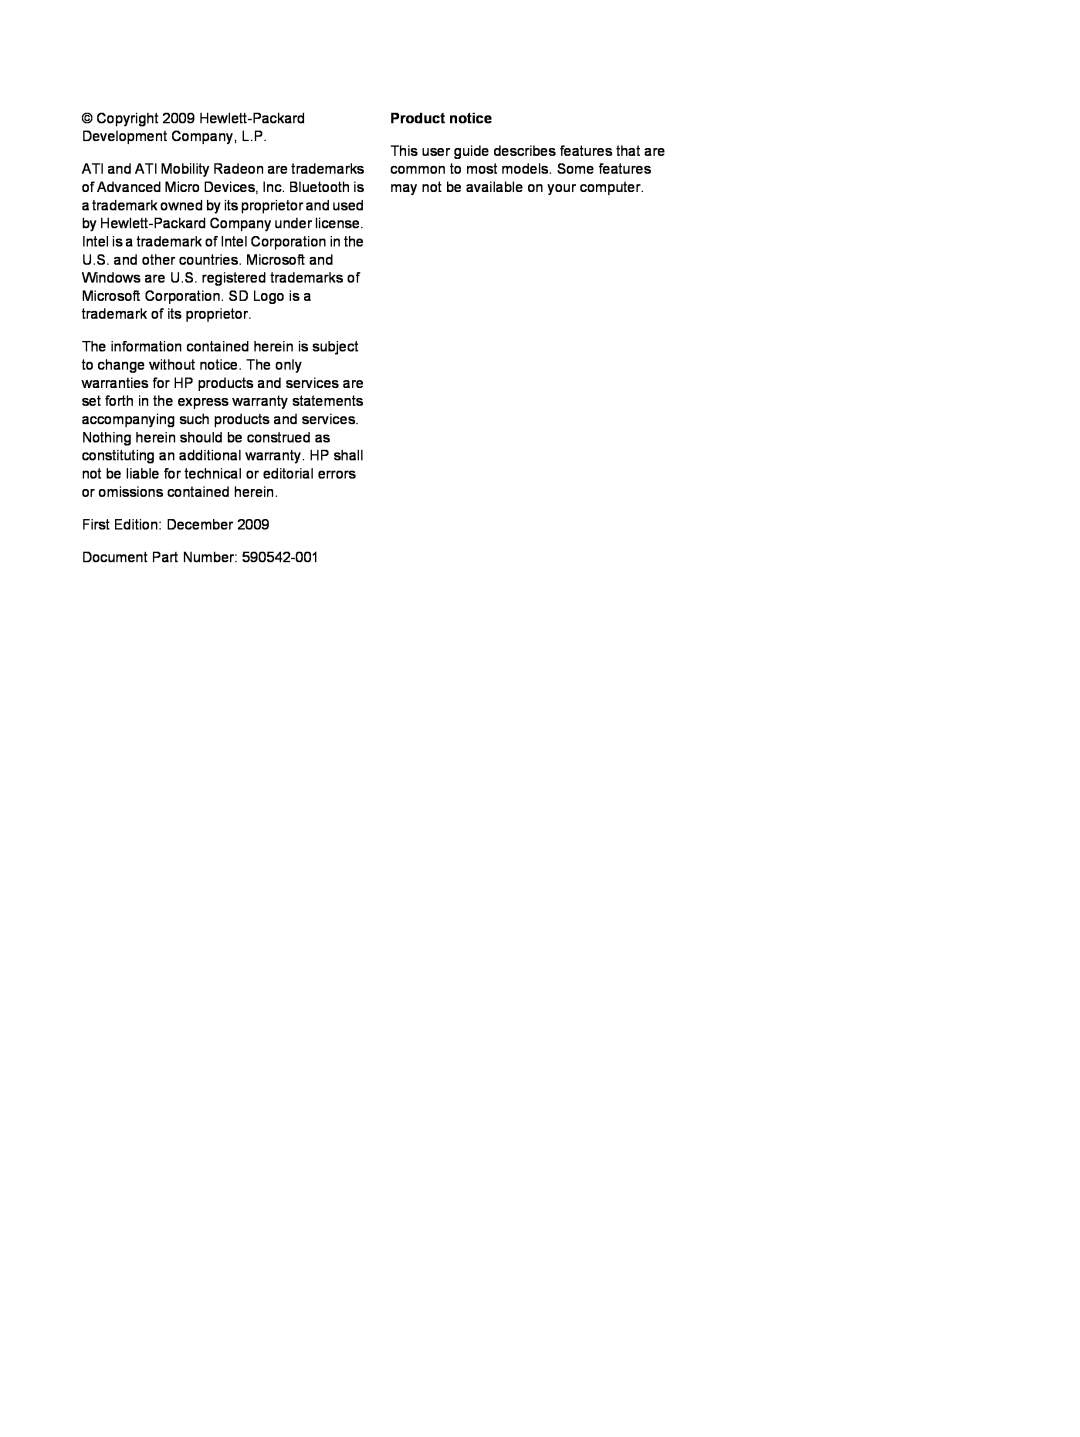 HP dv4-2160us manual Copyright 2009 Hewlett-Packard Development Company, L.P, First Edition December Document Part Number 